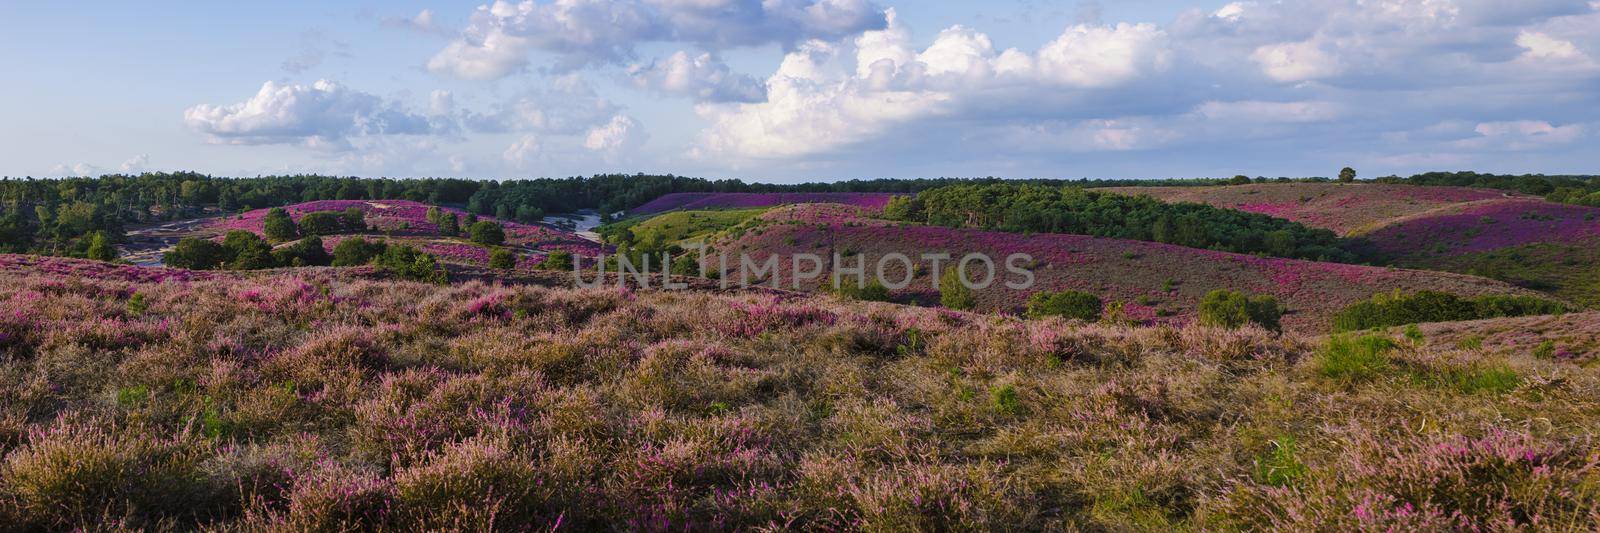 Posbank National park Veluwe, purple pink heather in bloom, blooming heater on the Veluwe by fokkebok